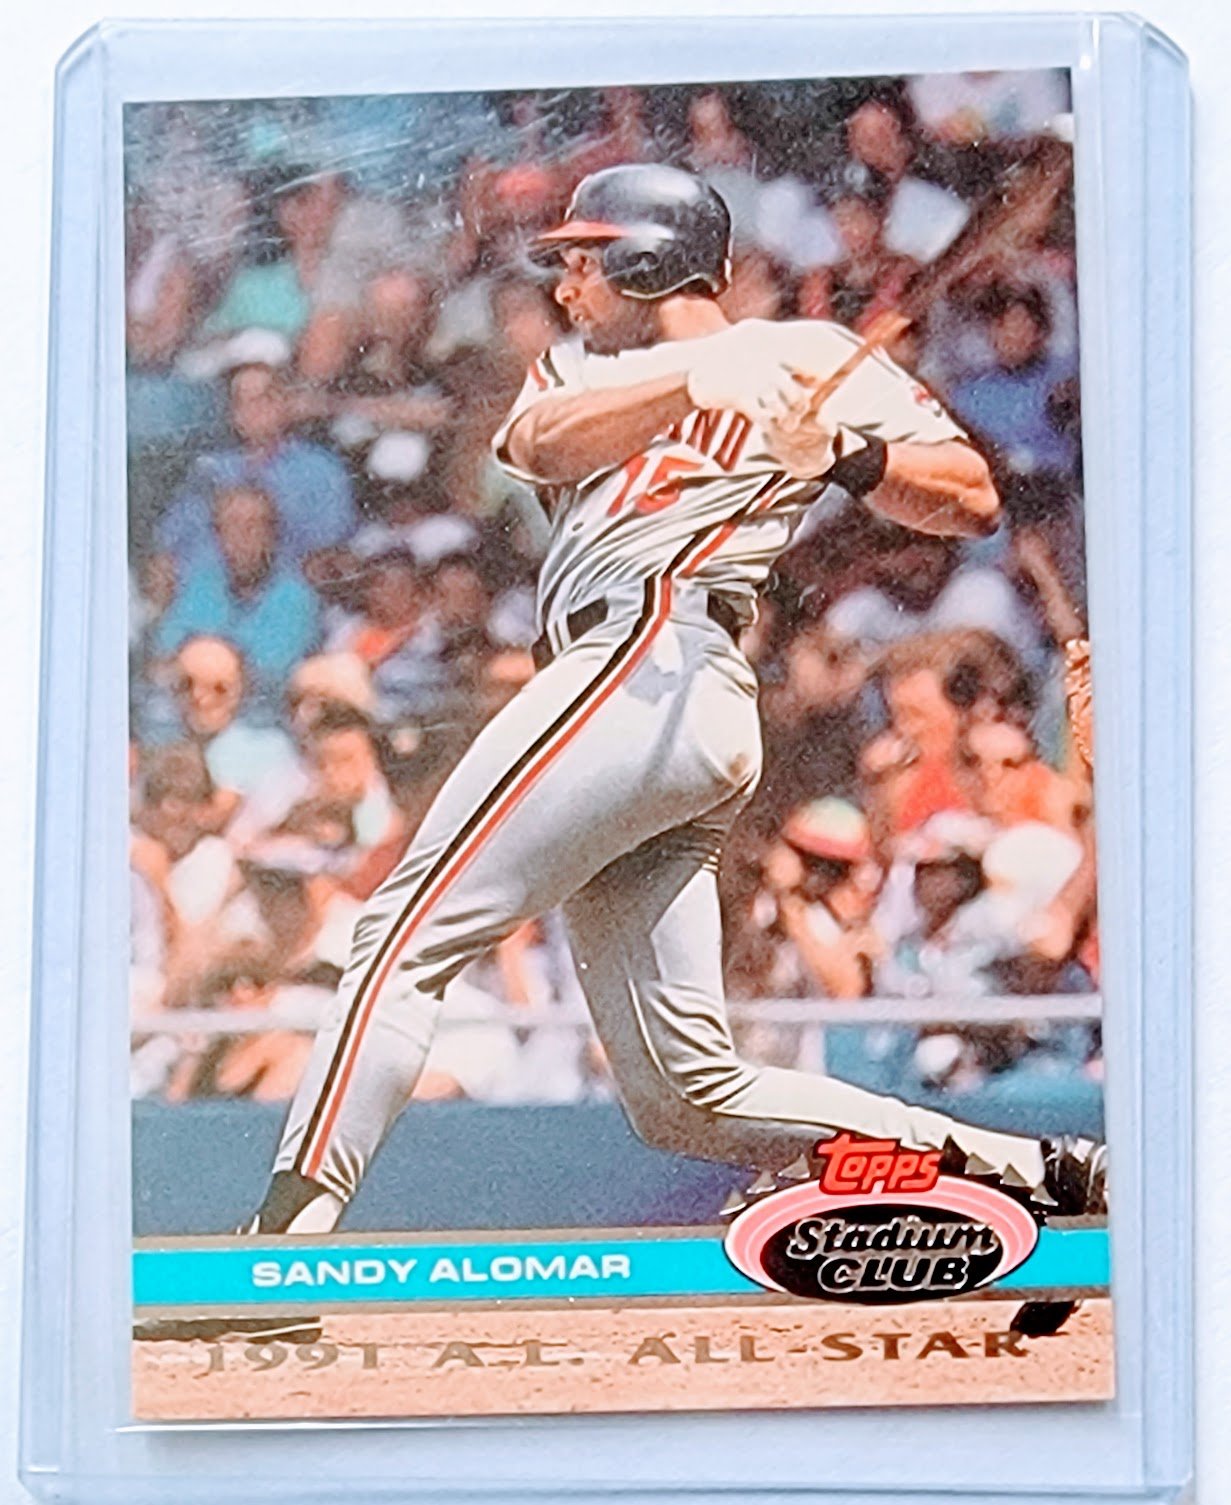 1992 Topps Stadium Club Dome Sandy Alomar 1991 All Star MLB Baseball Trading Card TPTV simple Xclusive Collectibles   